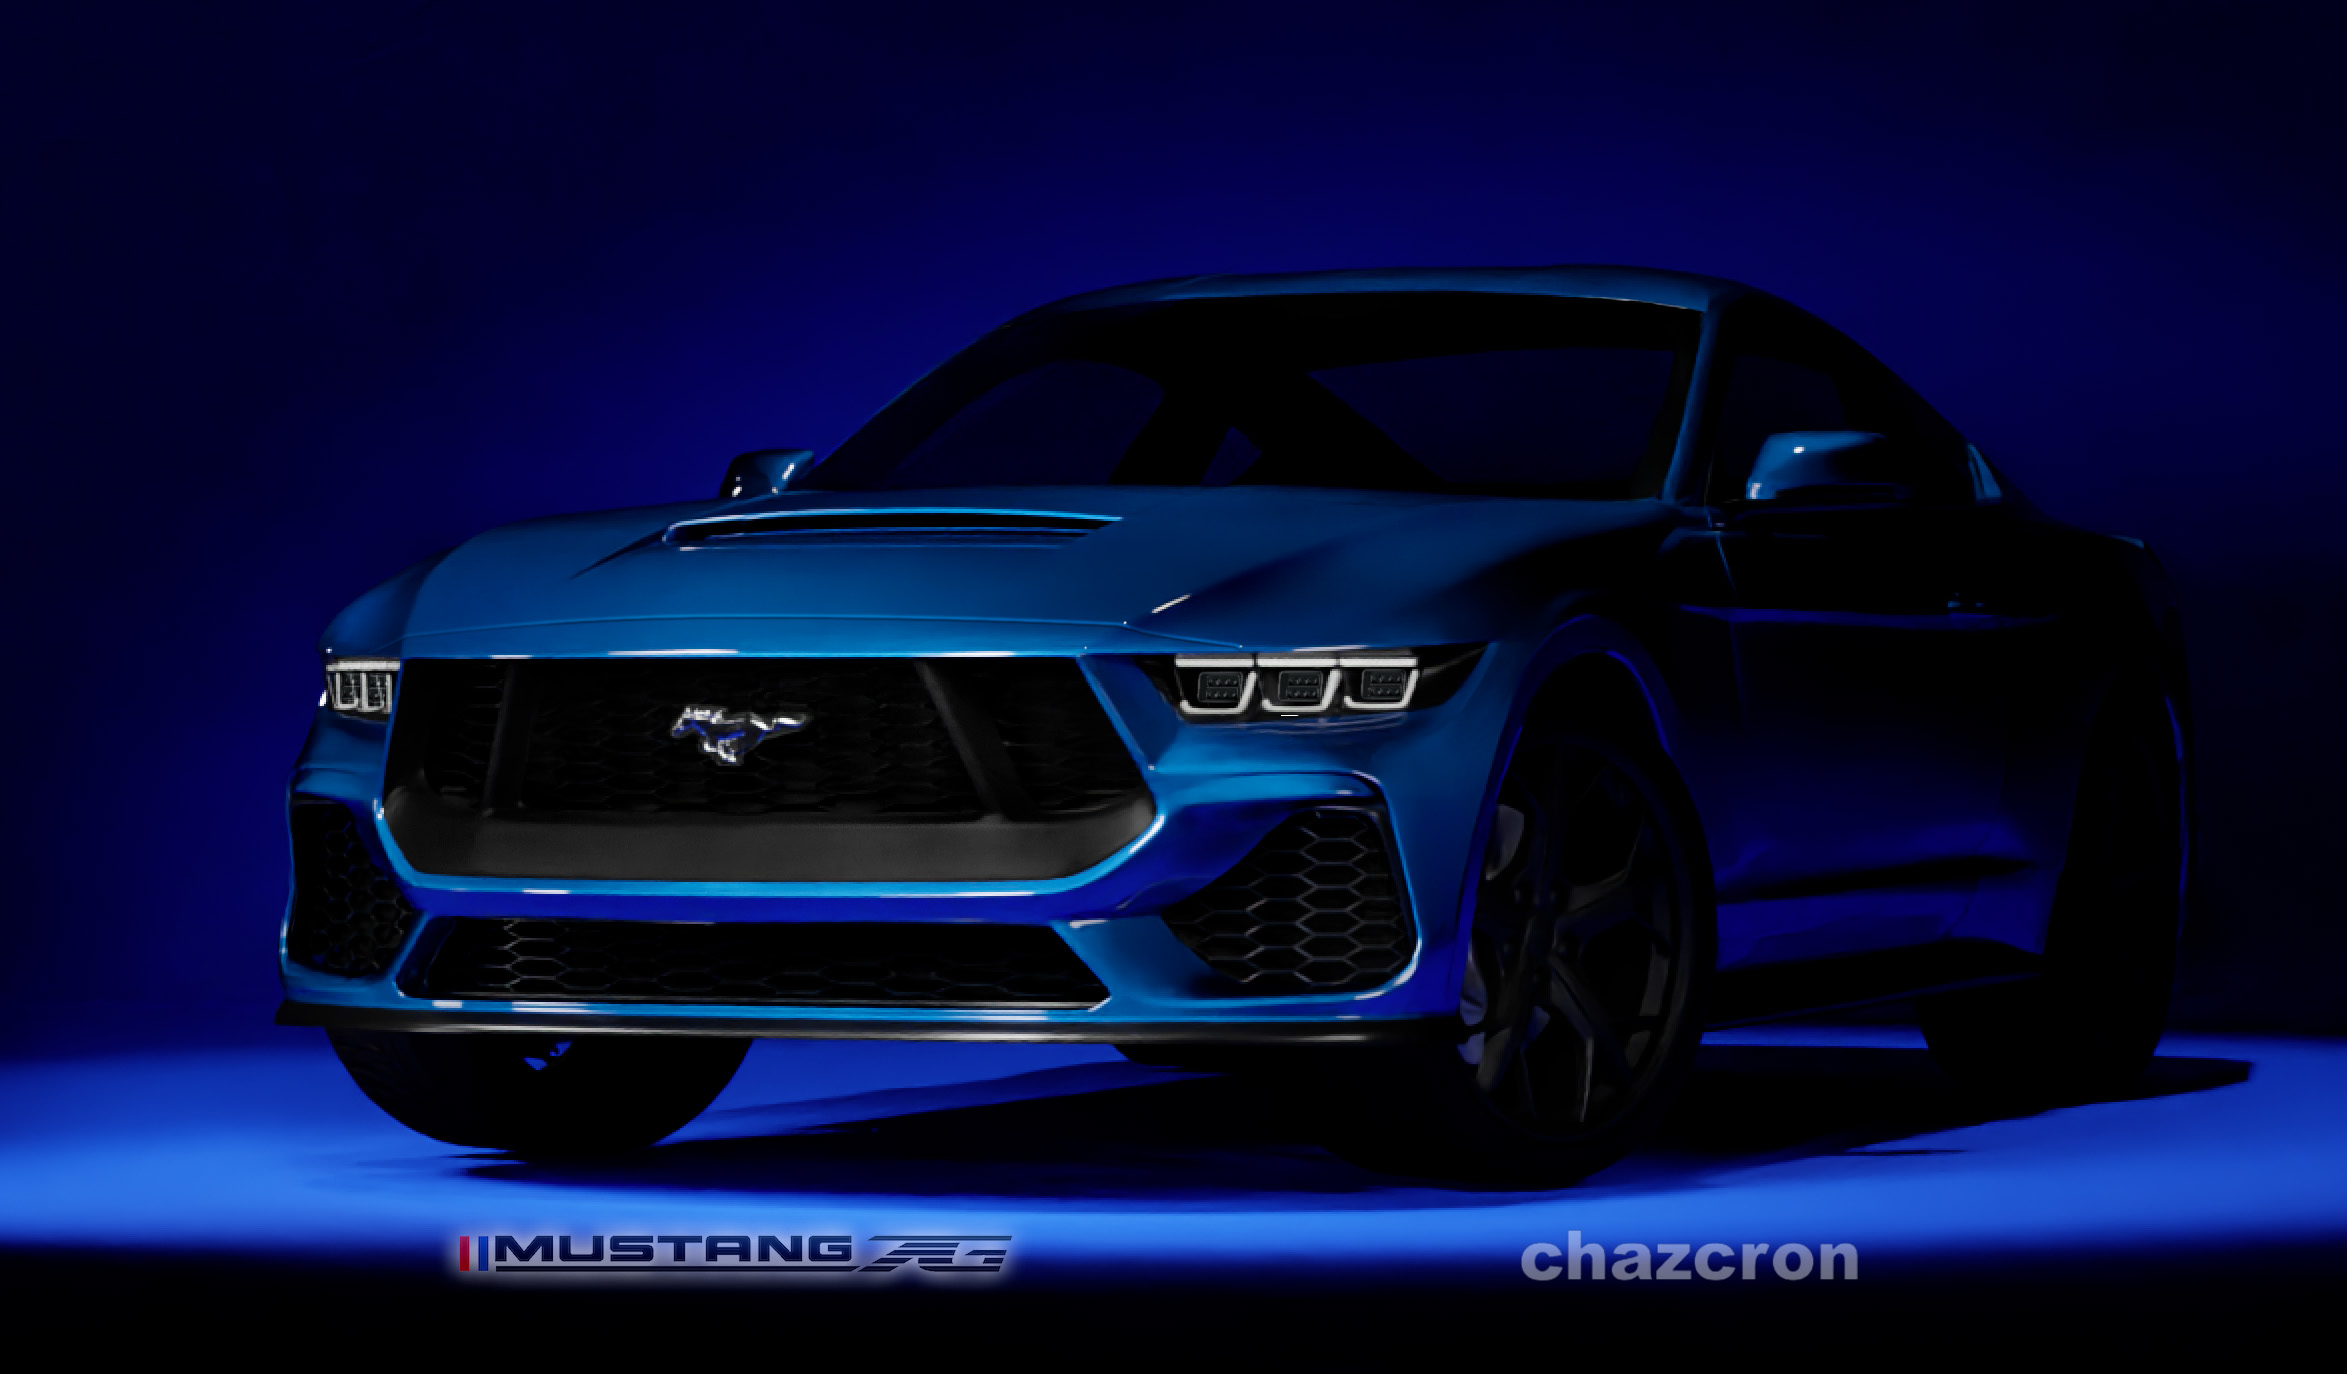 S650 Mustang chazcron weighs in... 7th gen 2023 Mustang S650 3D model & renderings in several colors! Grabber